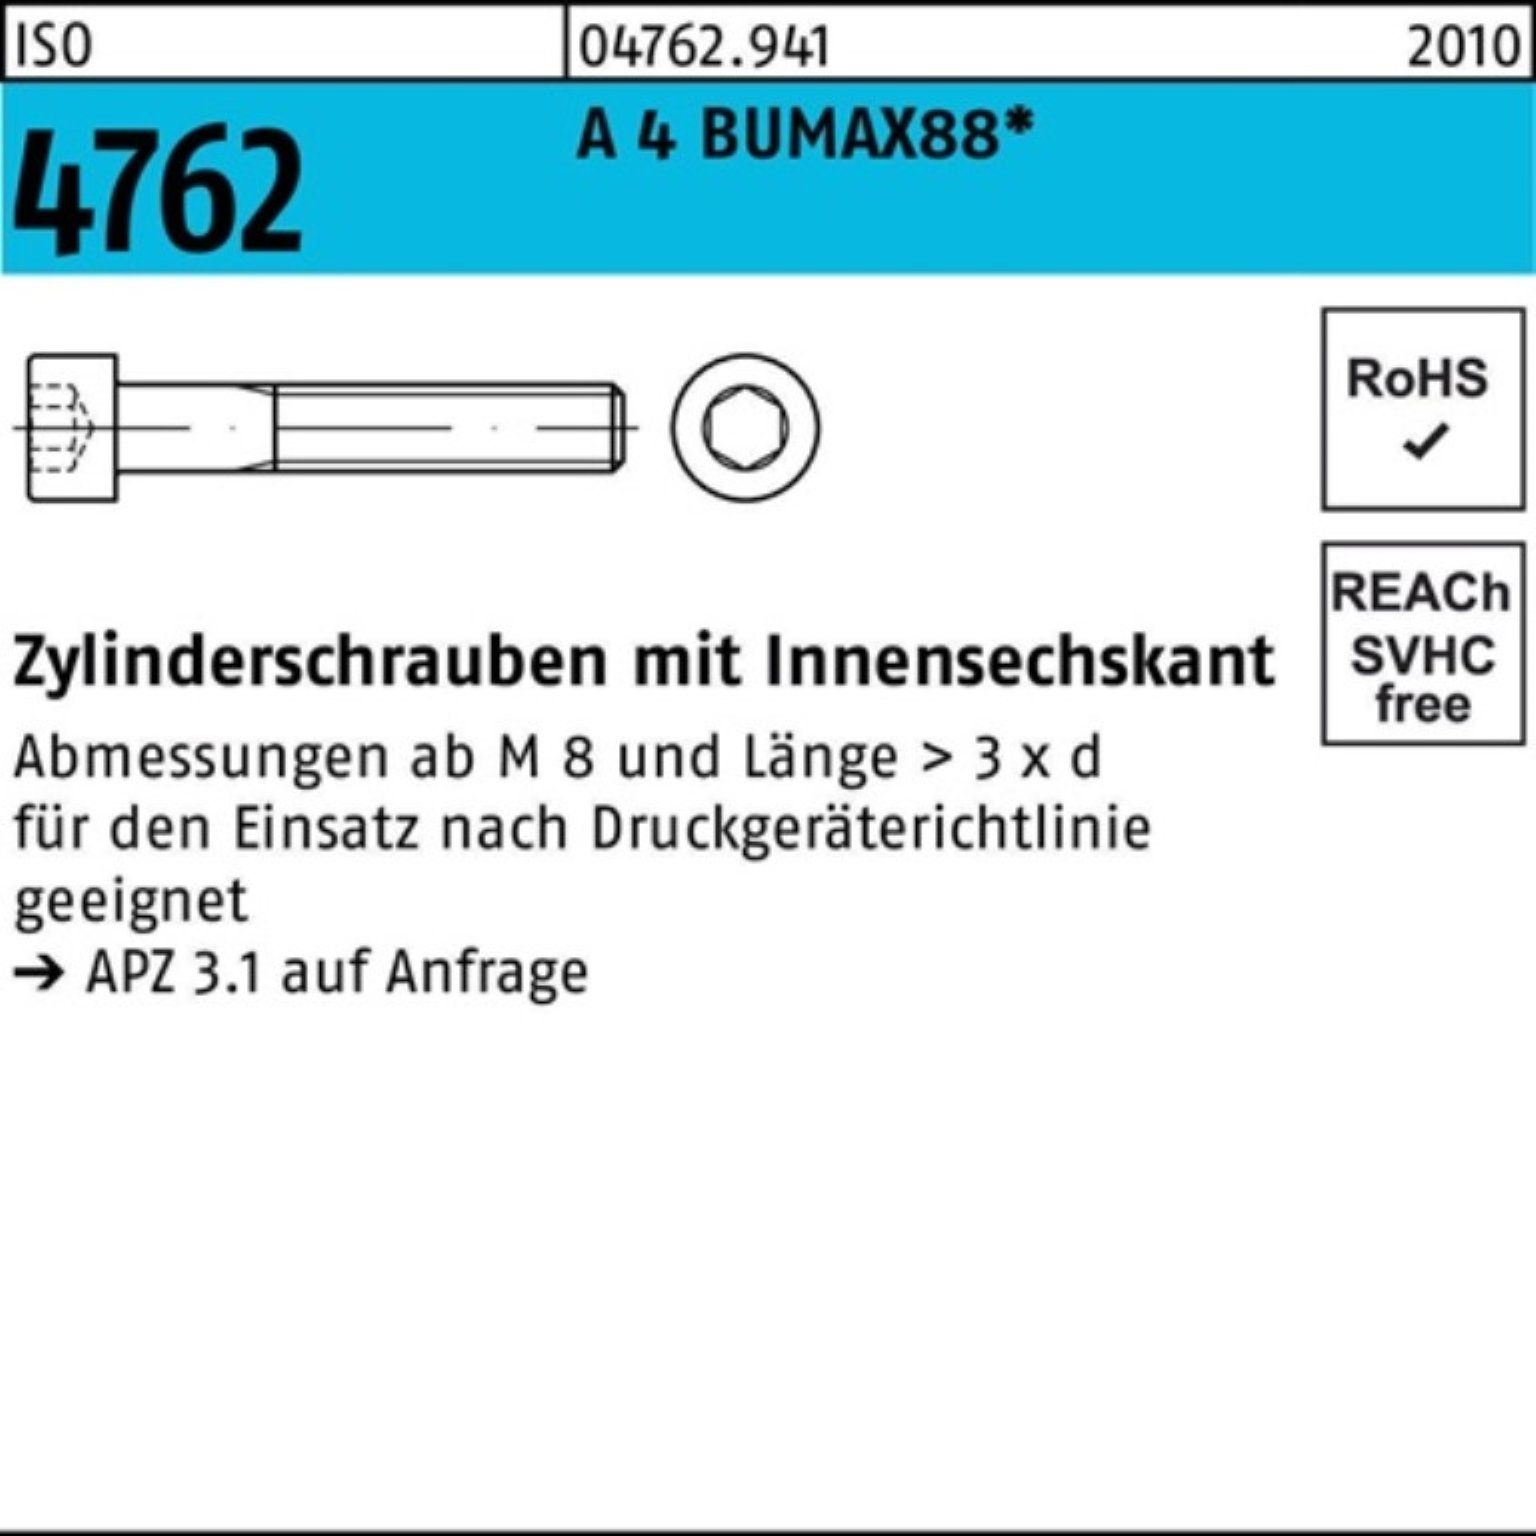 4 Zylinderschraube 4762 Innen-6kt Zylinderschraube M4x Pack A ISO Bufab 200 25 200er BUMAX88